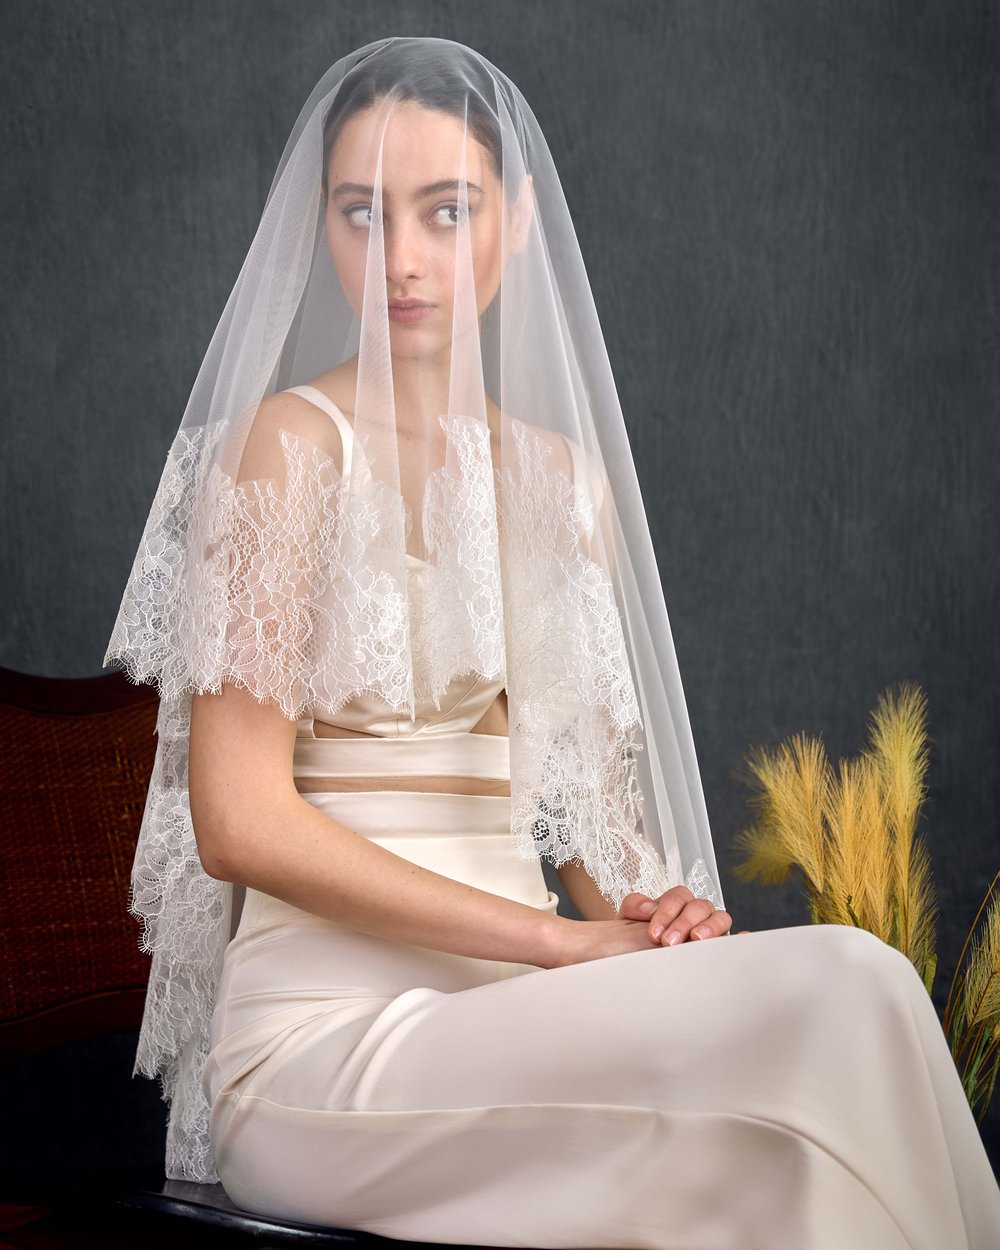 Wedding Veil - Mantilla Lace Trimmed Veil with Headband - Style #709